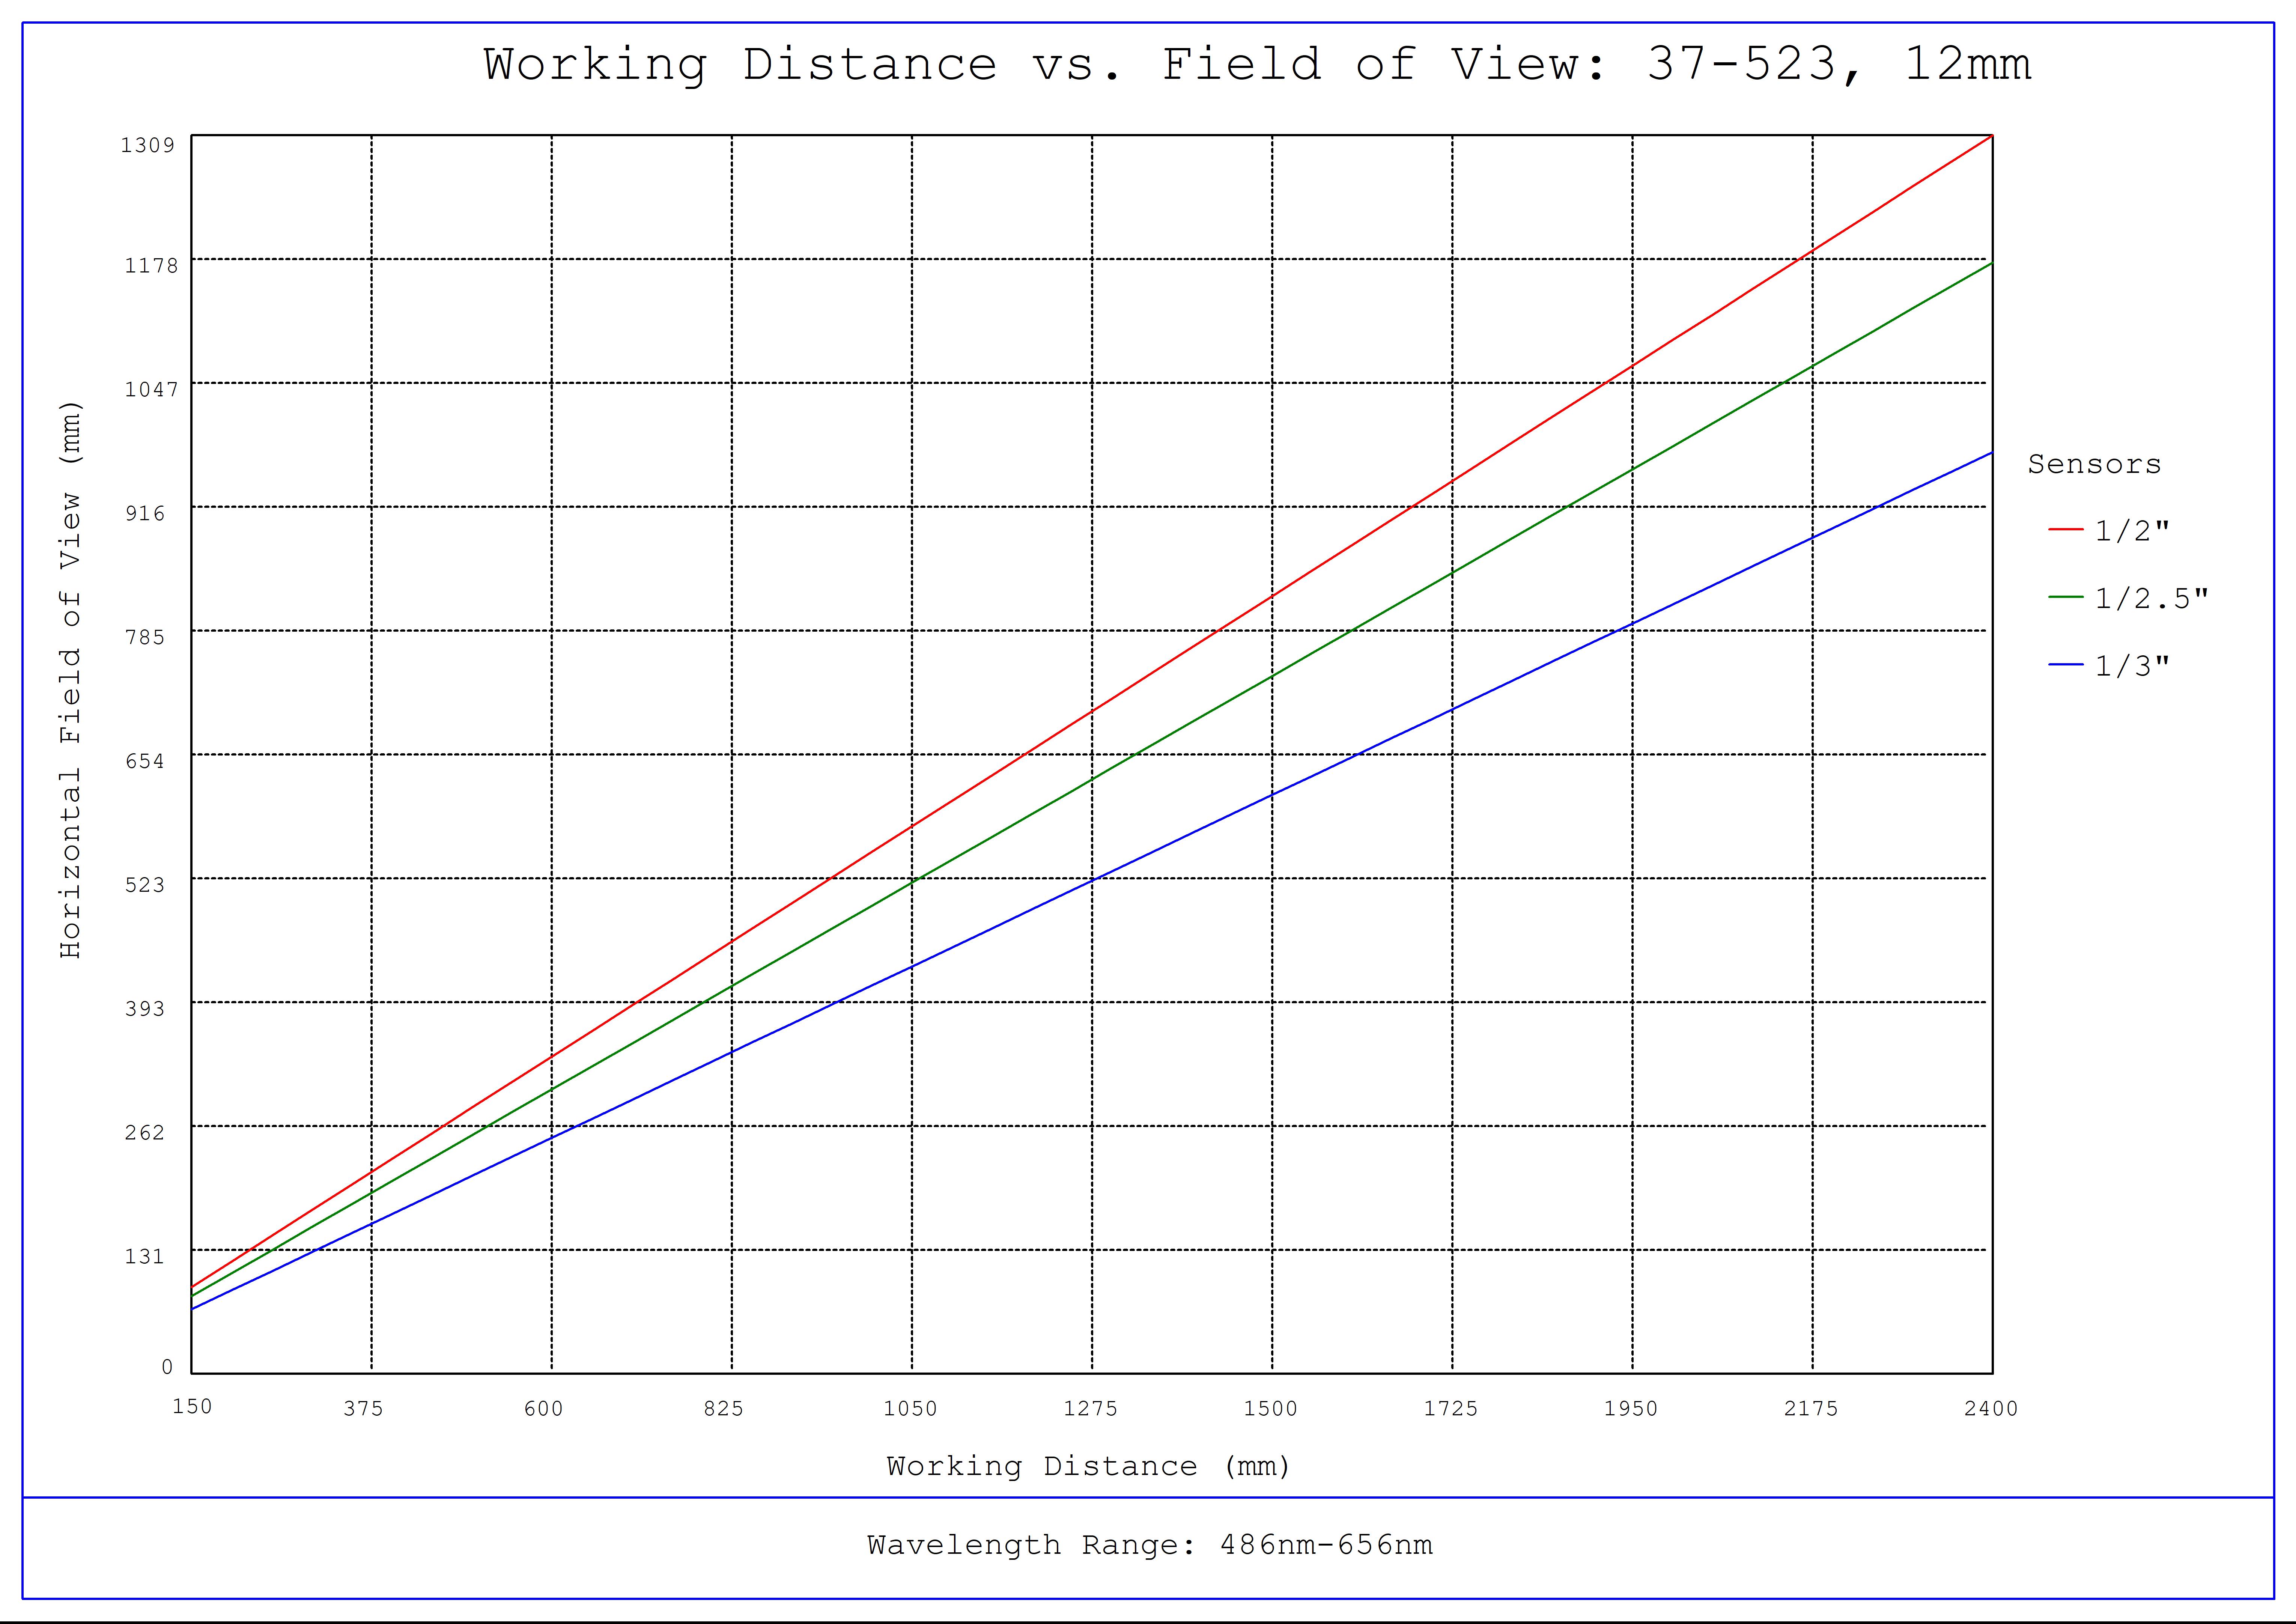 #37-523, 12mm FL, Liquid Lens M12 Lens, Working Distance versus Field of View Plot